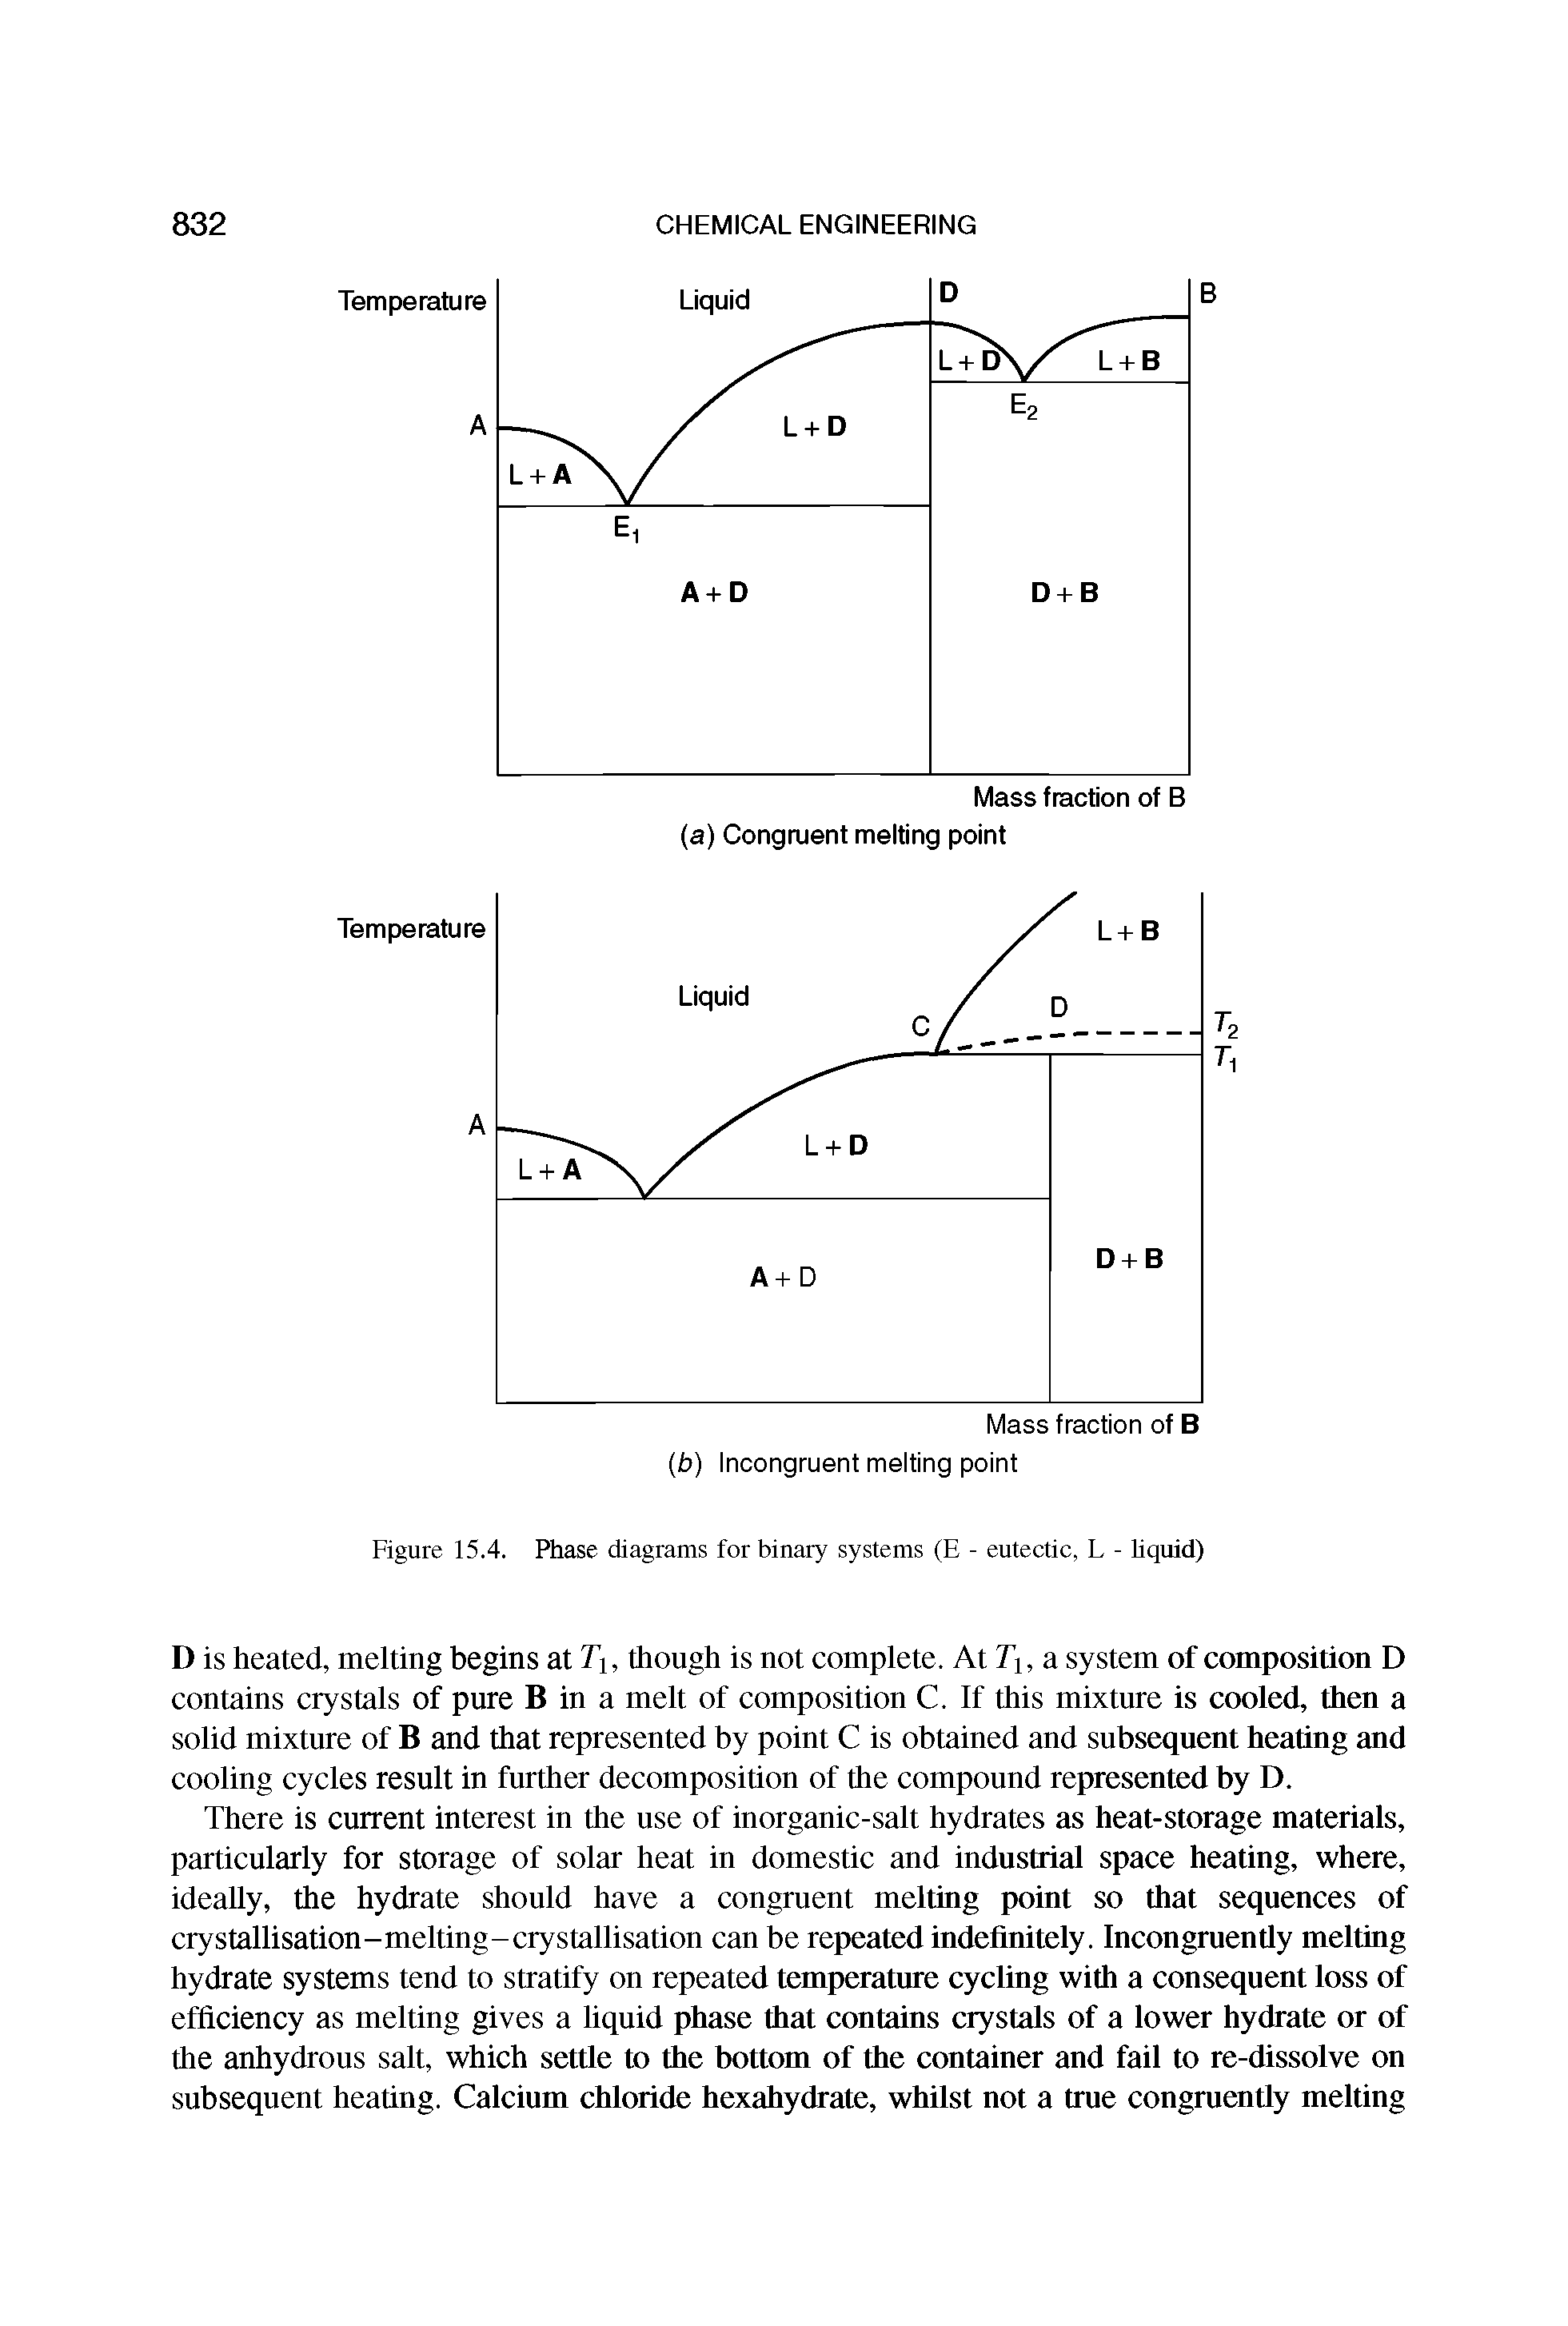 Figure 15.4. Phase diagrams for binary systems (E - eutectic, L - liquid)...